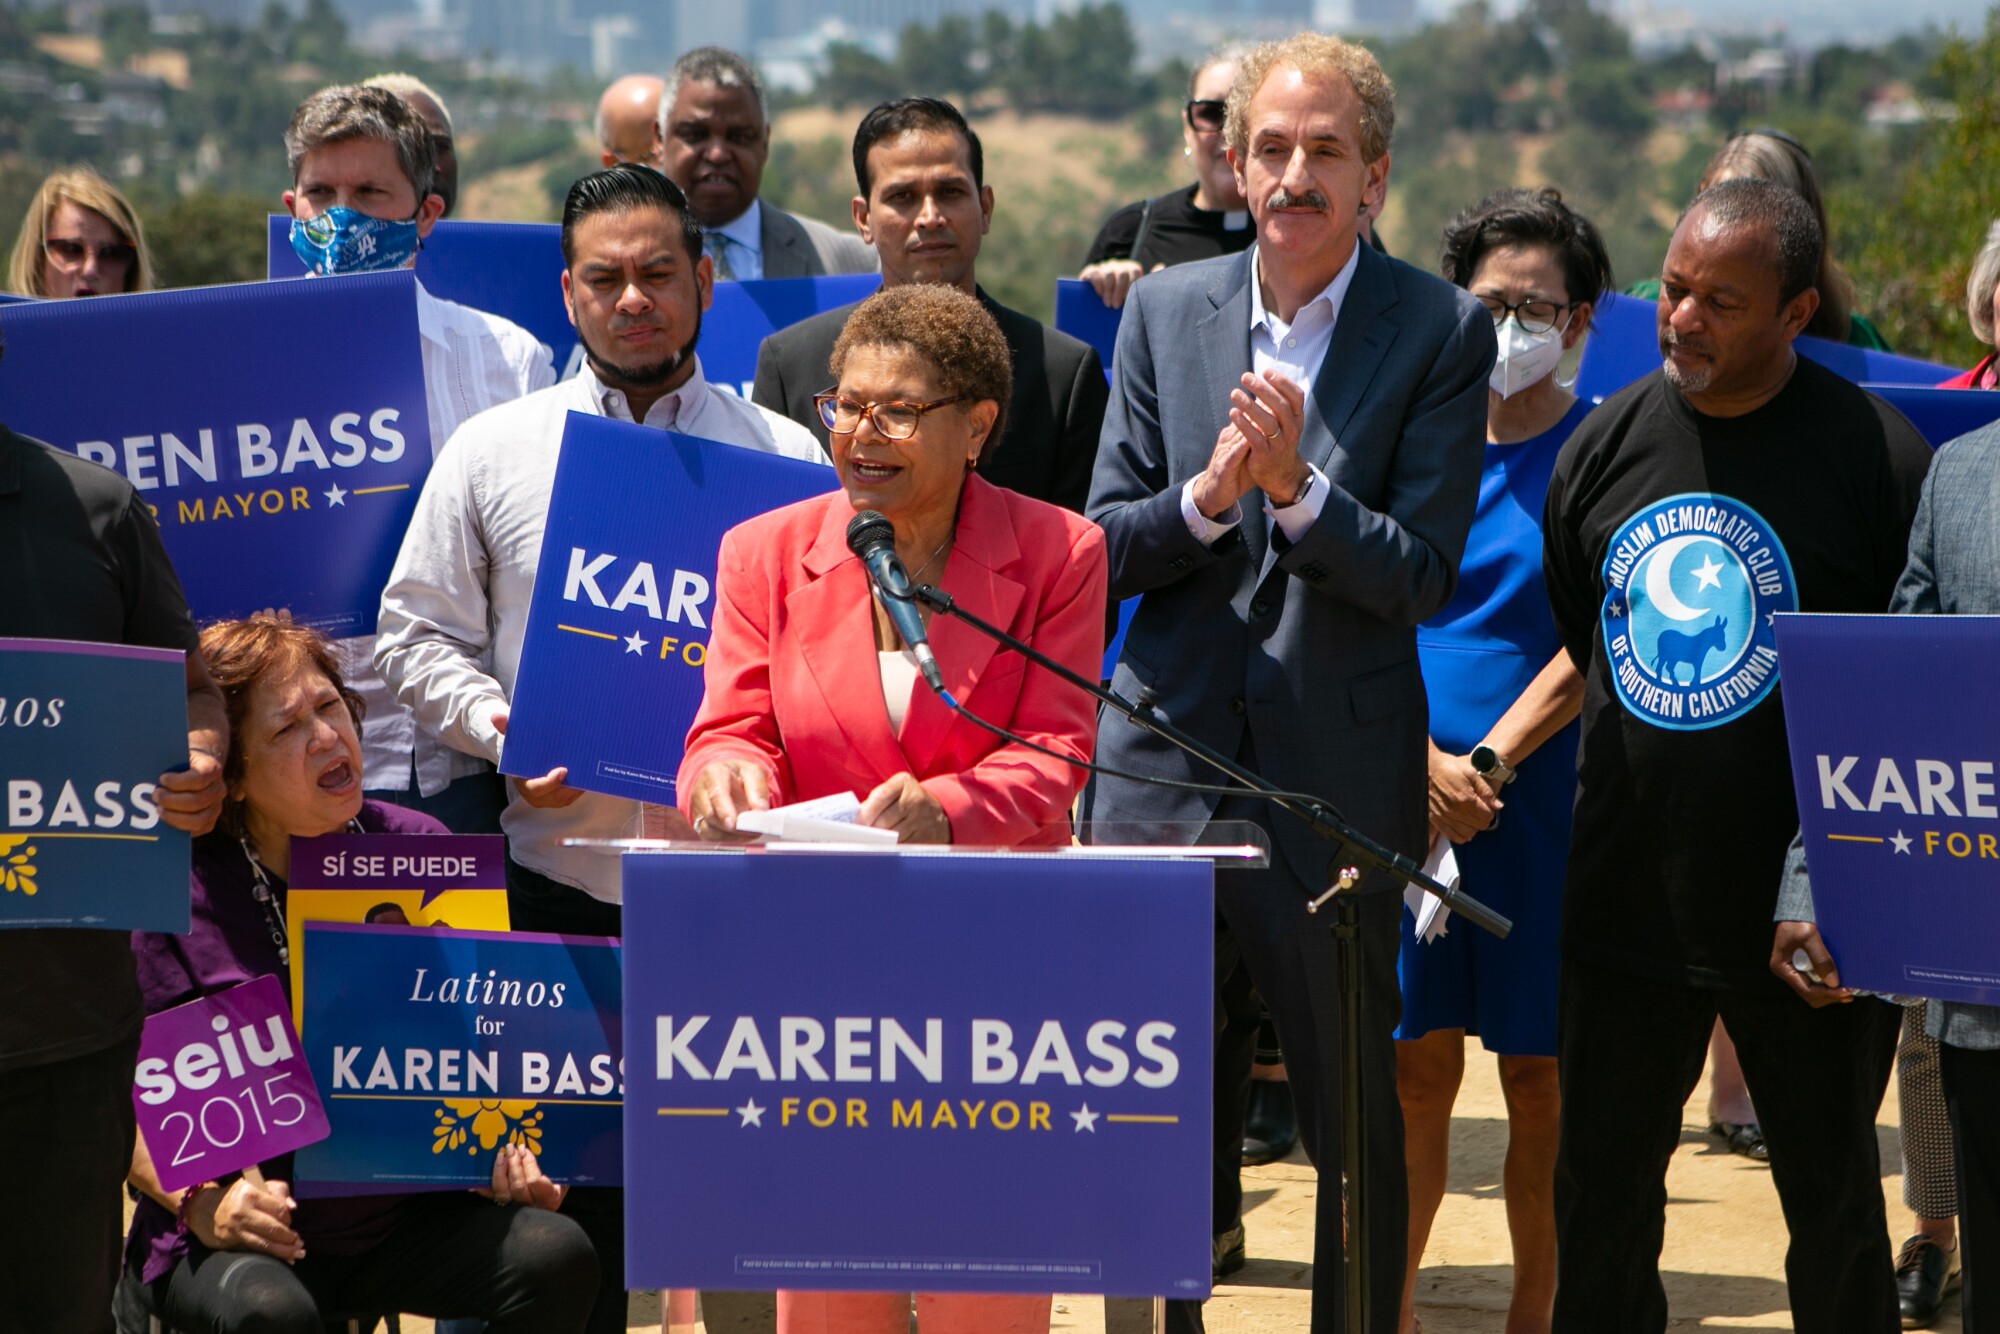 Karen Bass speaks as supporters hold "Karen Bass for Mayor" signs.